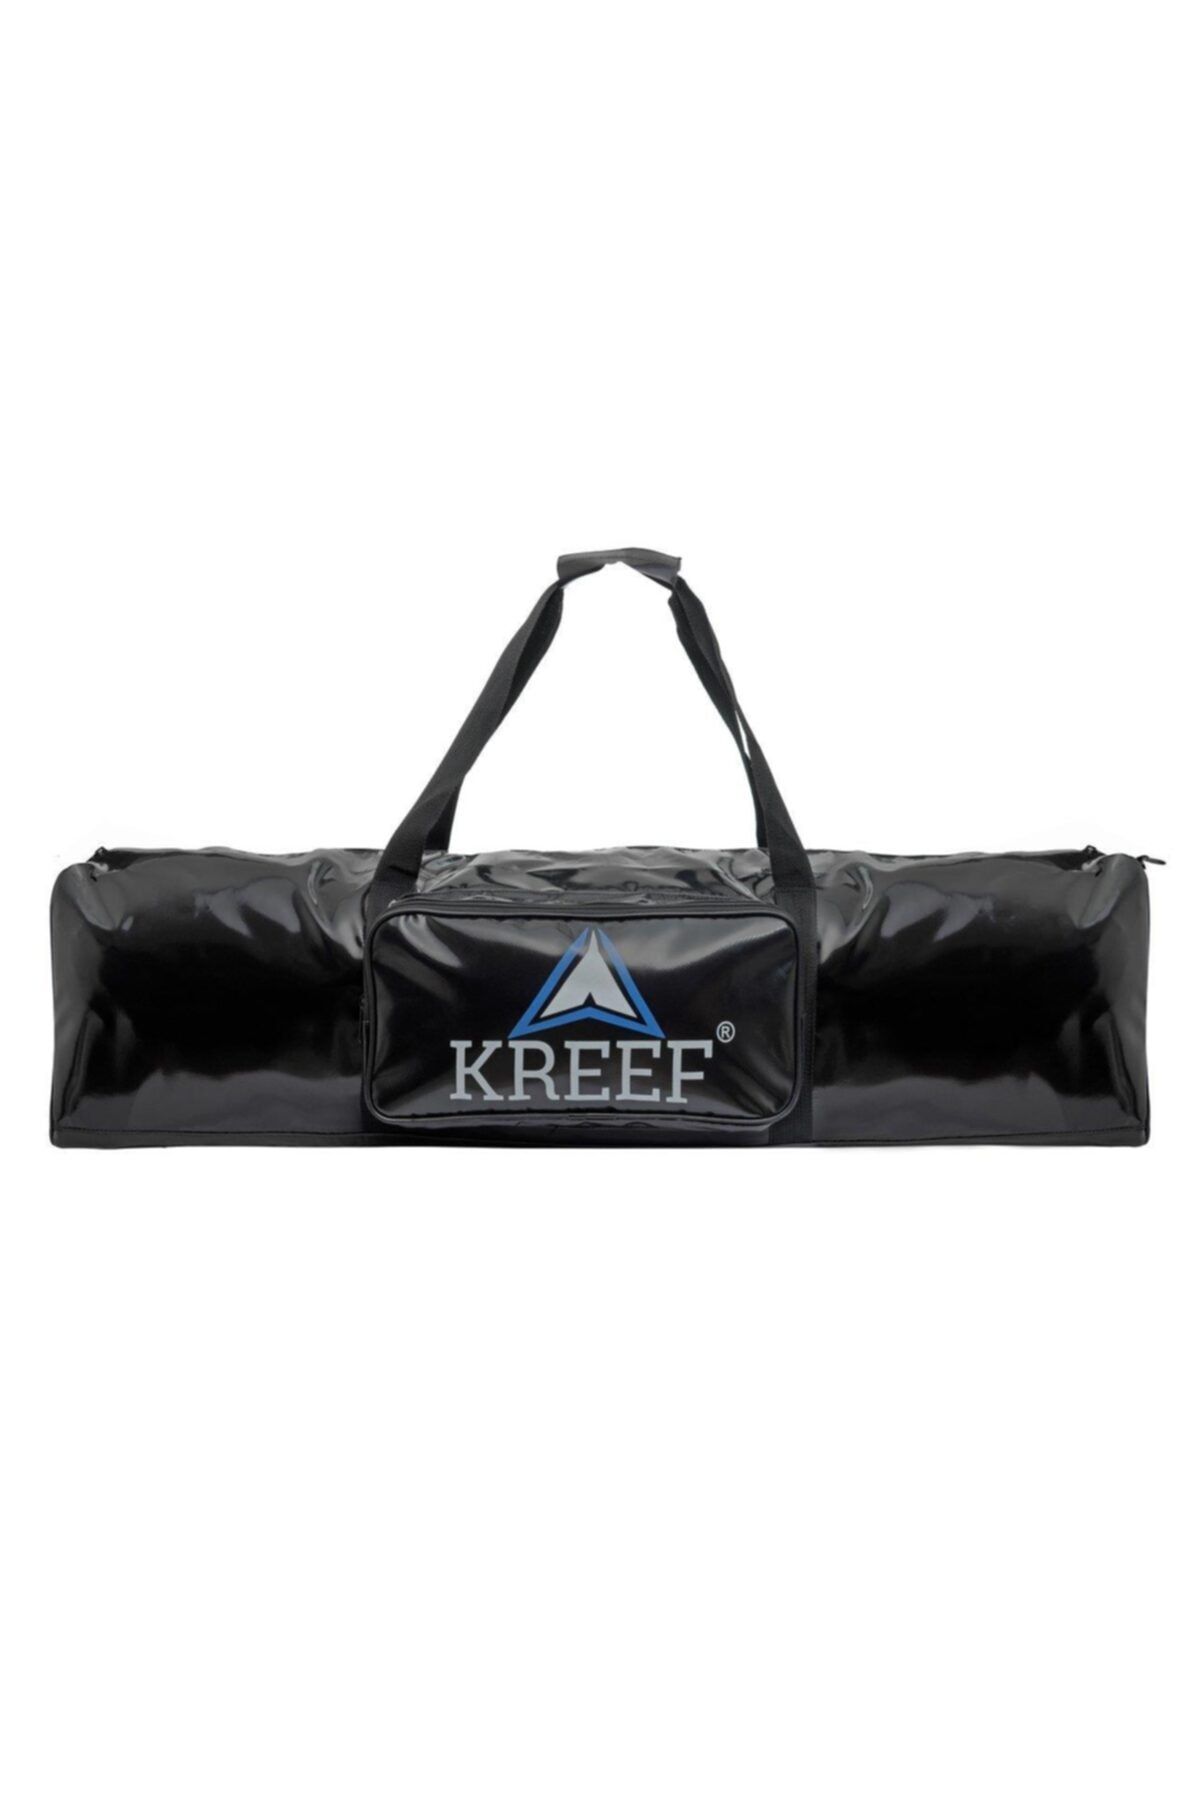 KREEF Dry Bag Dalış Çantası (75lt)